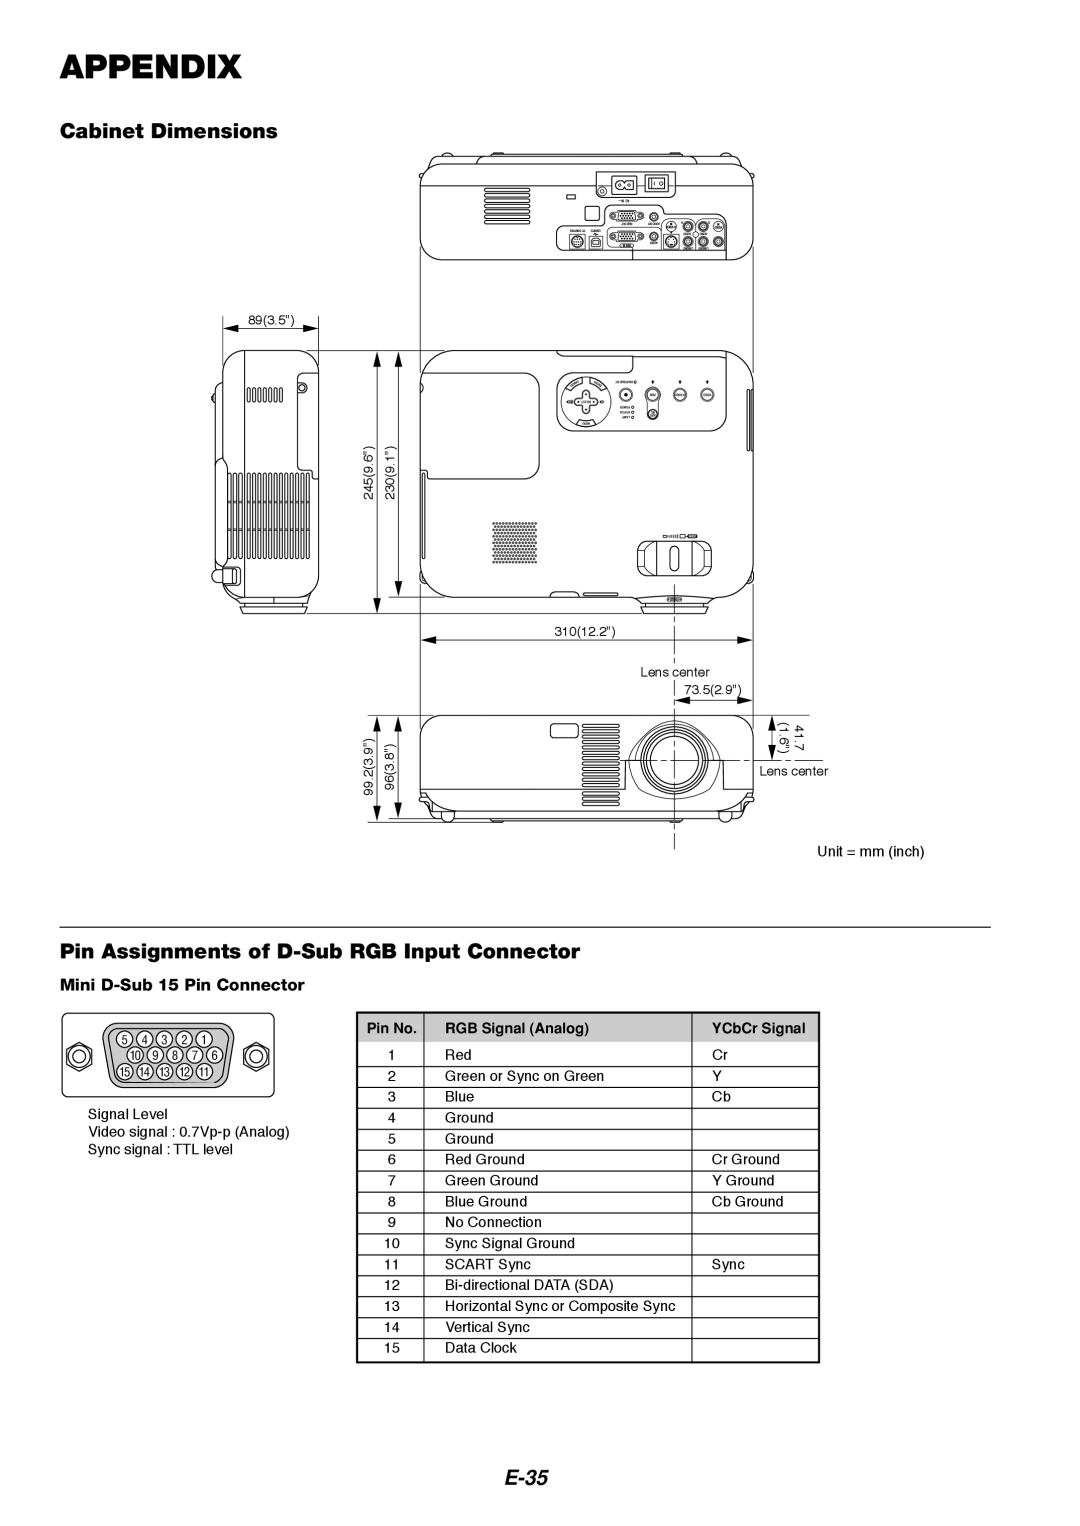 Dukane 8766 Appendix, Cabinet Dimensions, Pin Assignments of D-Sub RGB Input Connector, E-35, Mini D-Sub 15 Pin Connector 